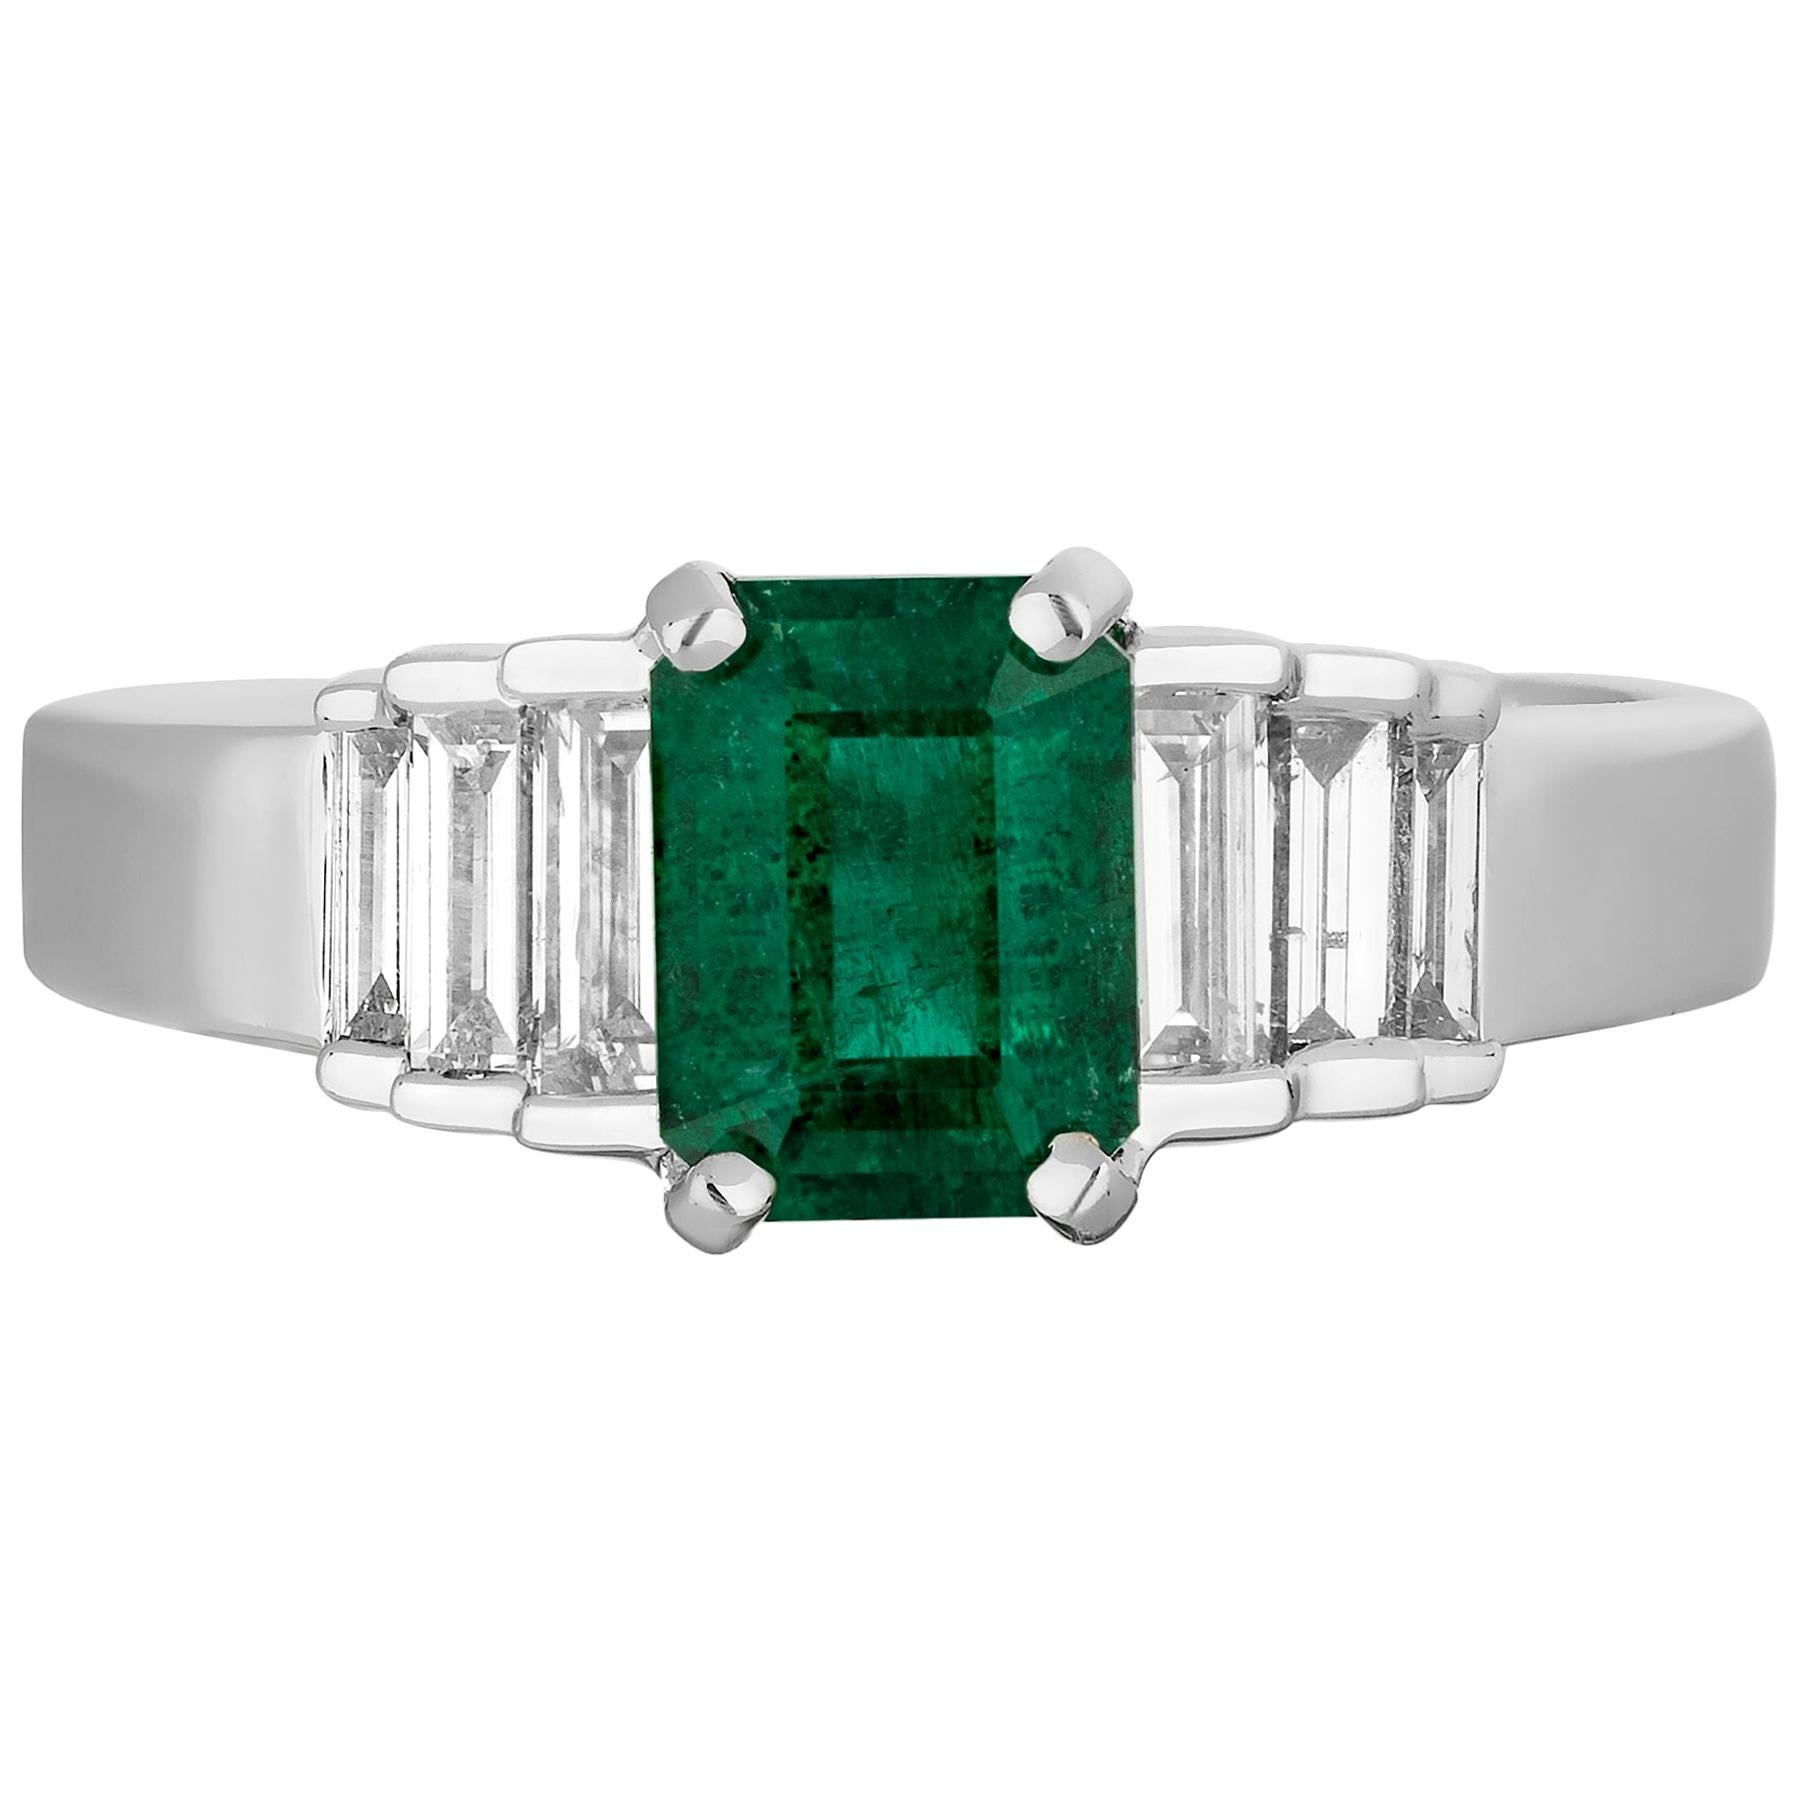 1.04 Carat Emerald Diamond Cocktail Ring